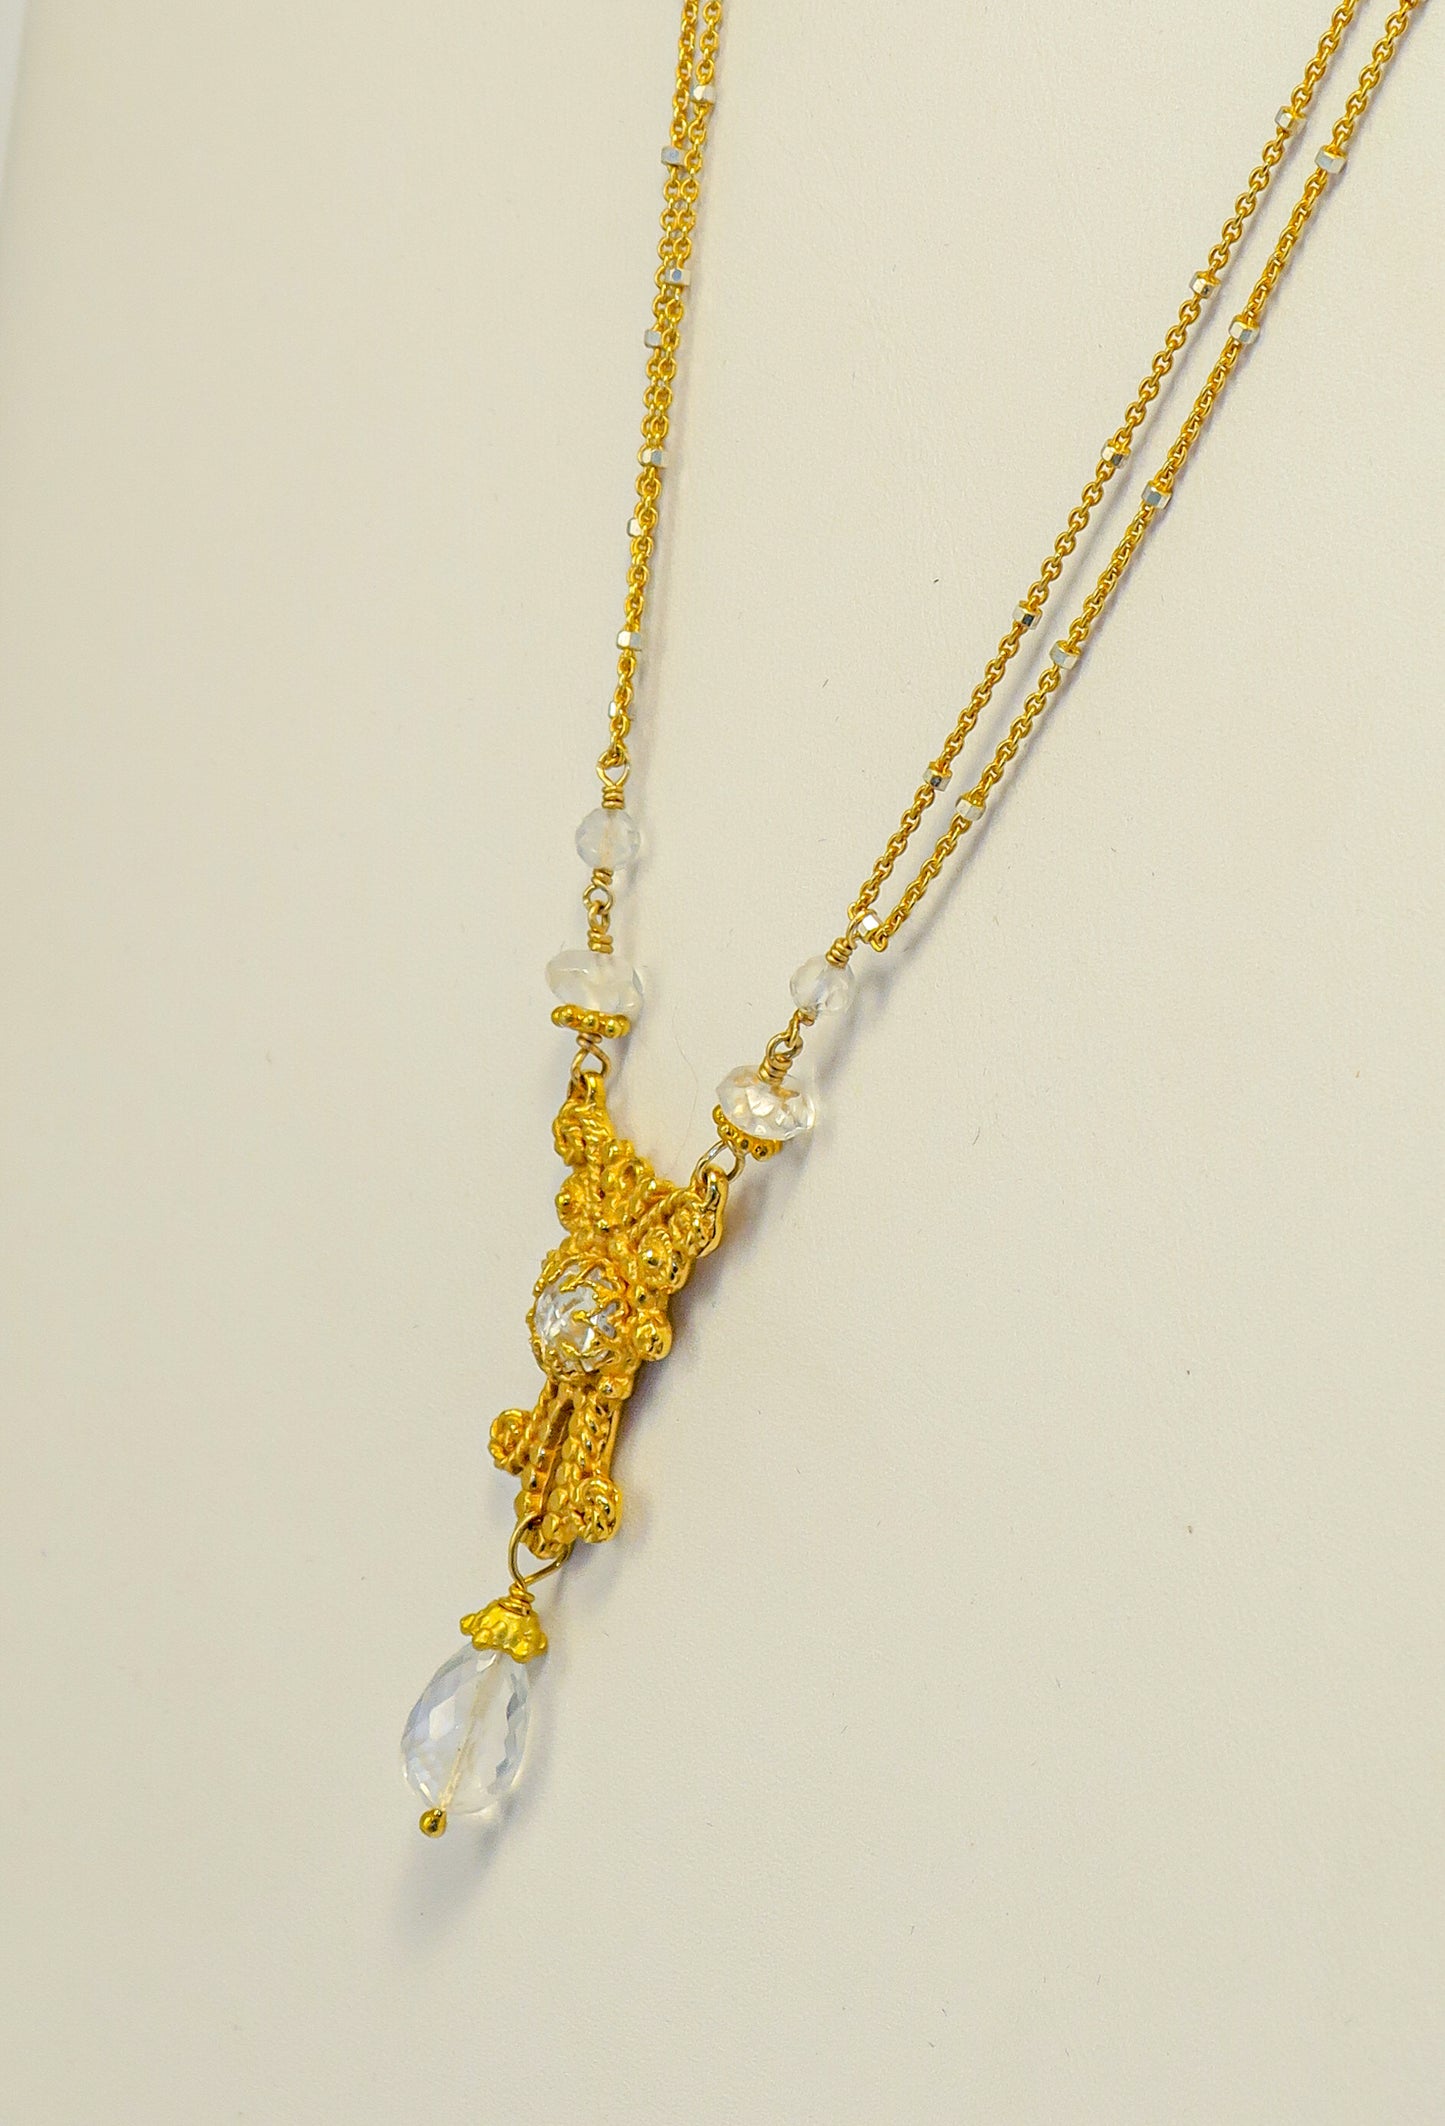 18K Gold Vermeil and Crystal Quartz Necklace | by Vanessa Mellet